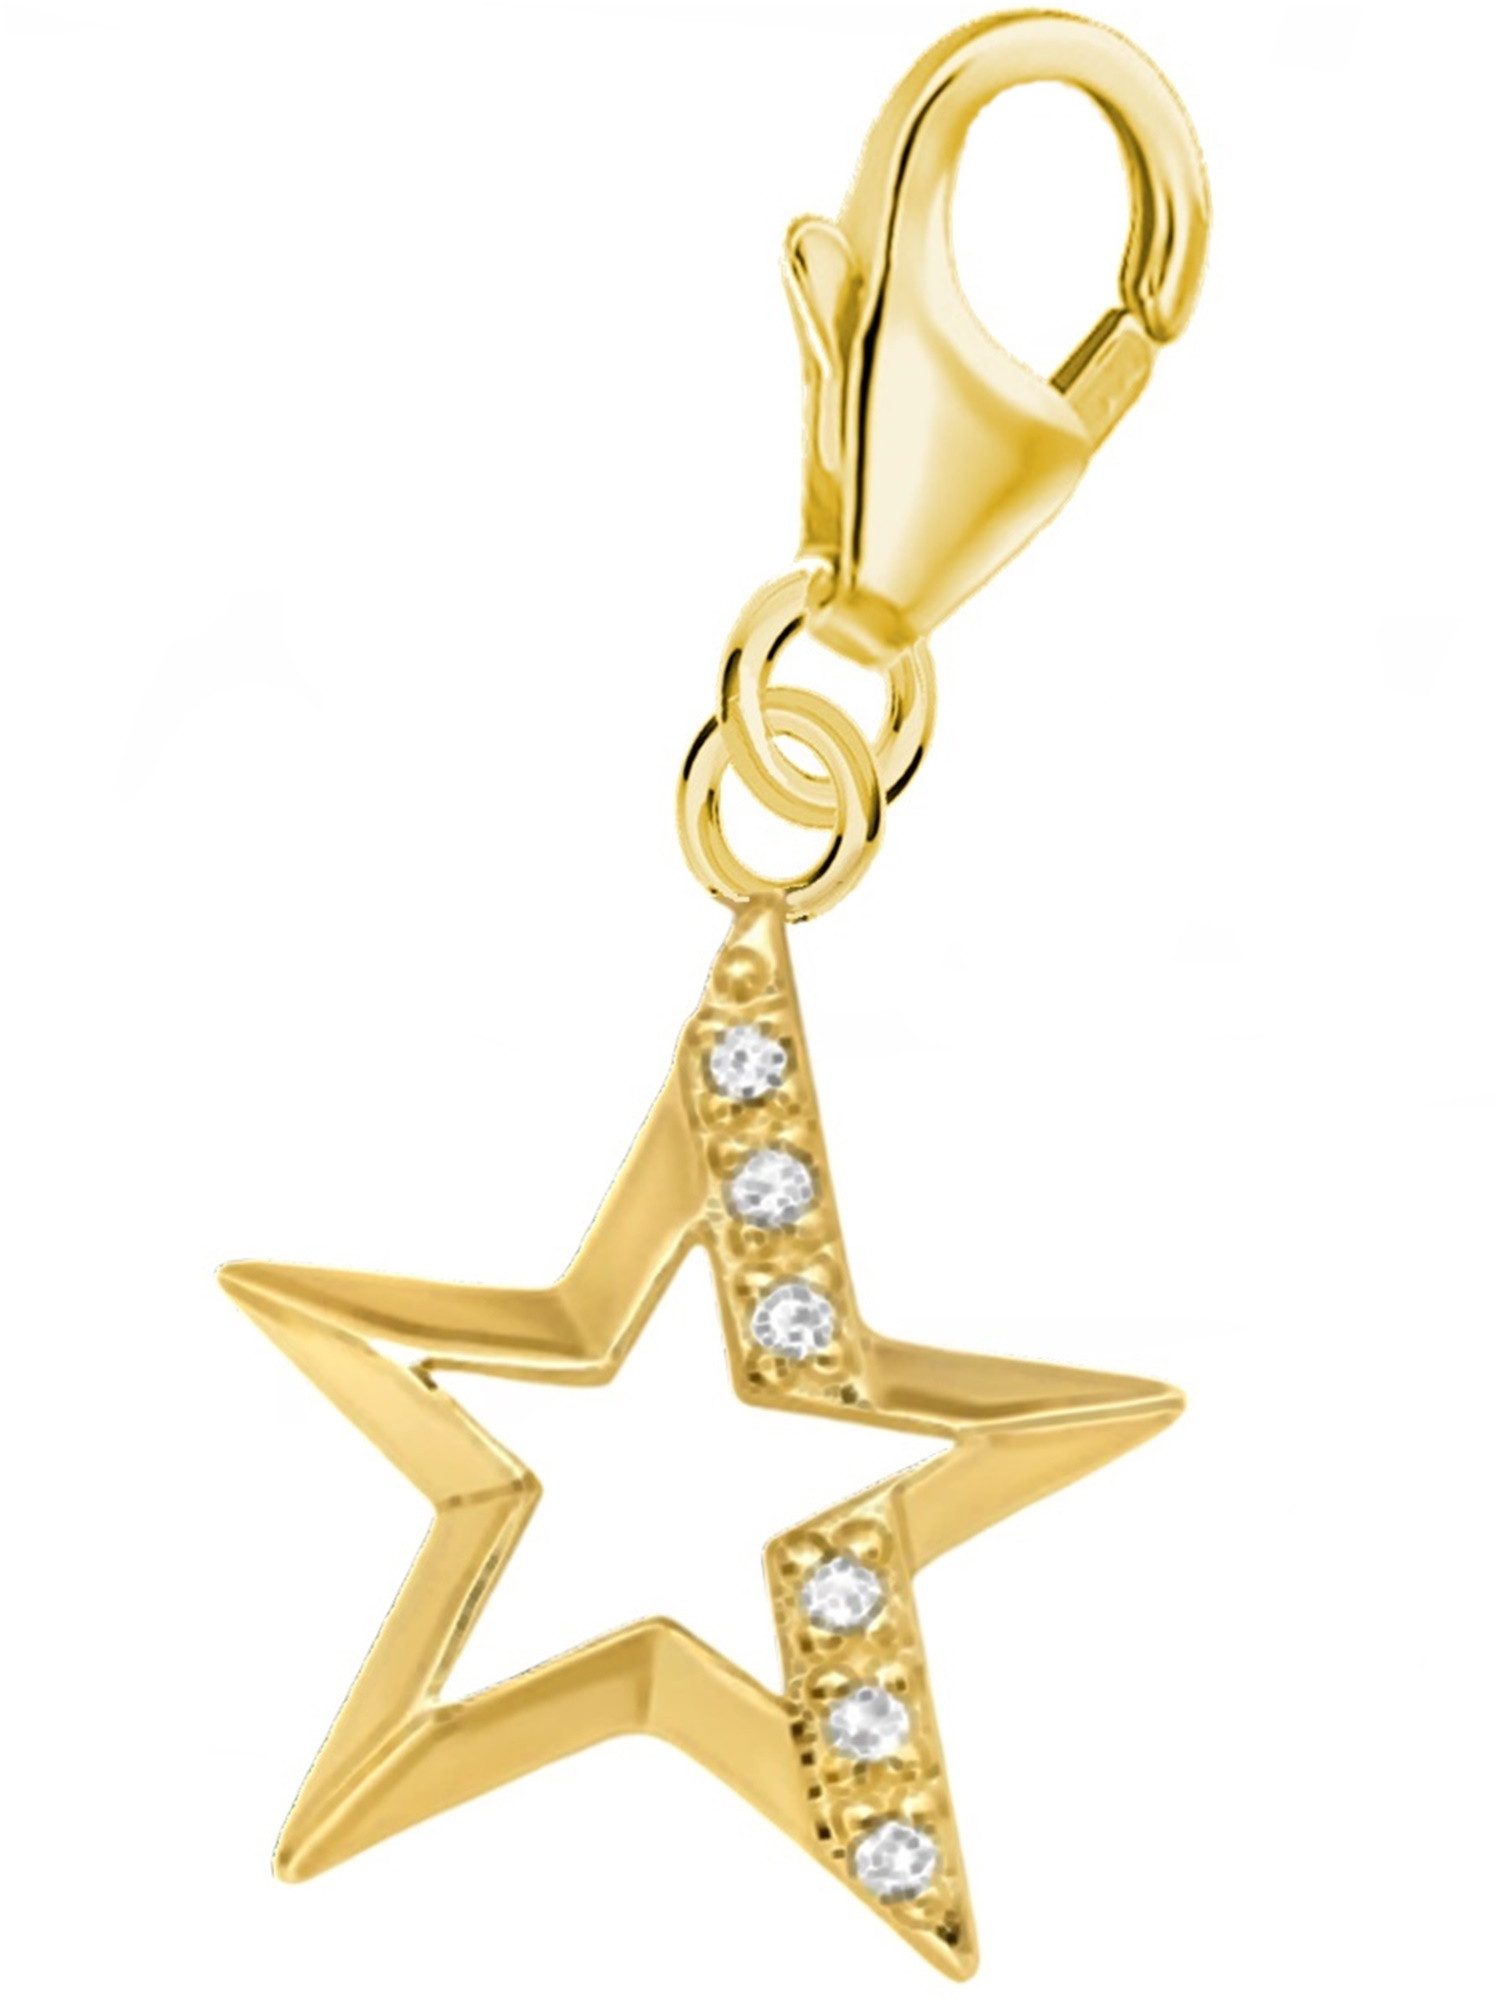 Goldene Hufeisen Charm Stern Goldene Stern Charm Anhänger 925 Silber Gold vergoldet, Charm Silberschmuck für Damen